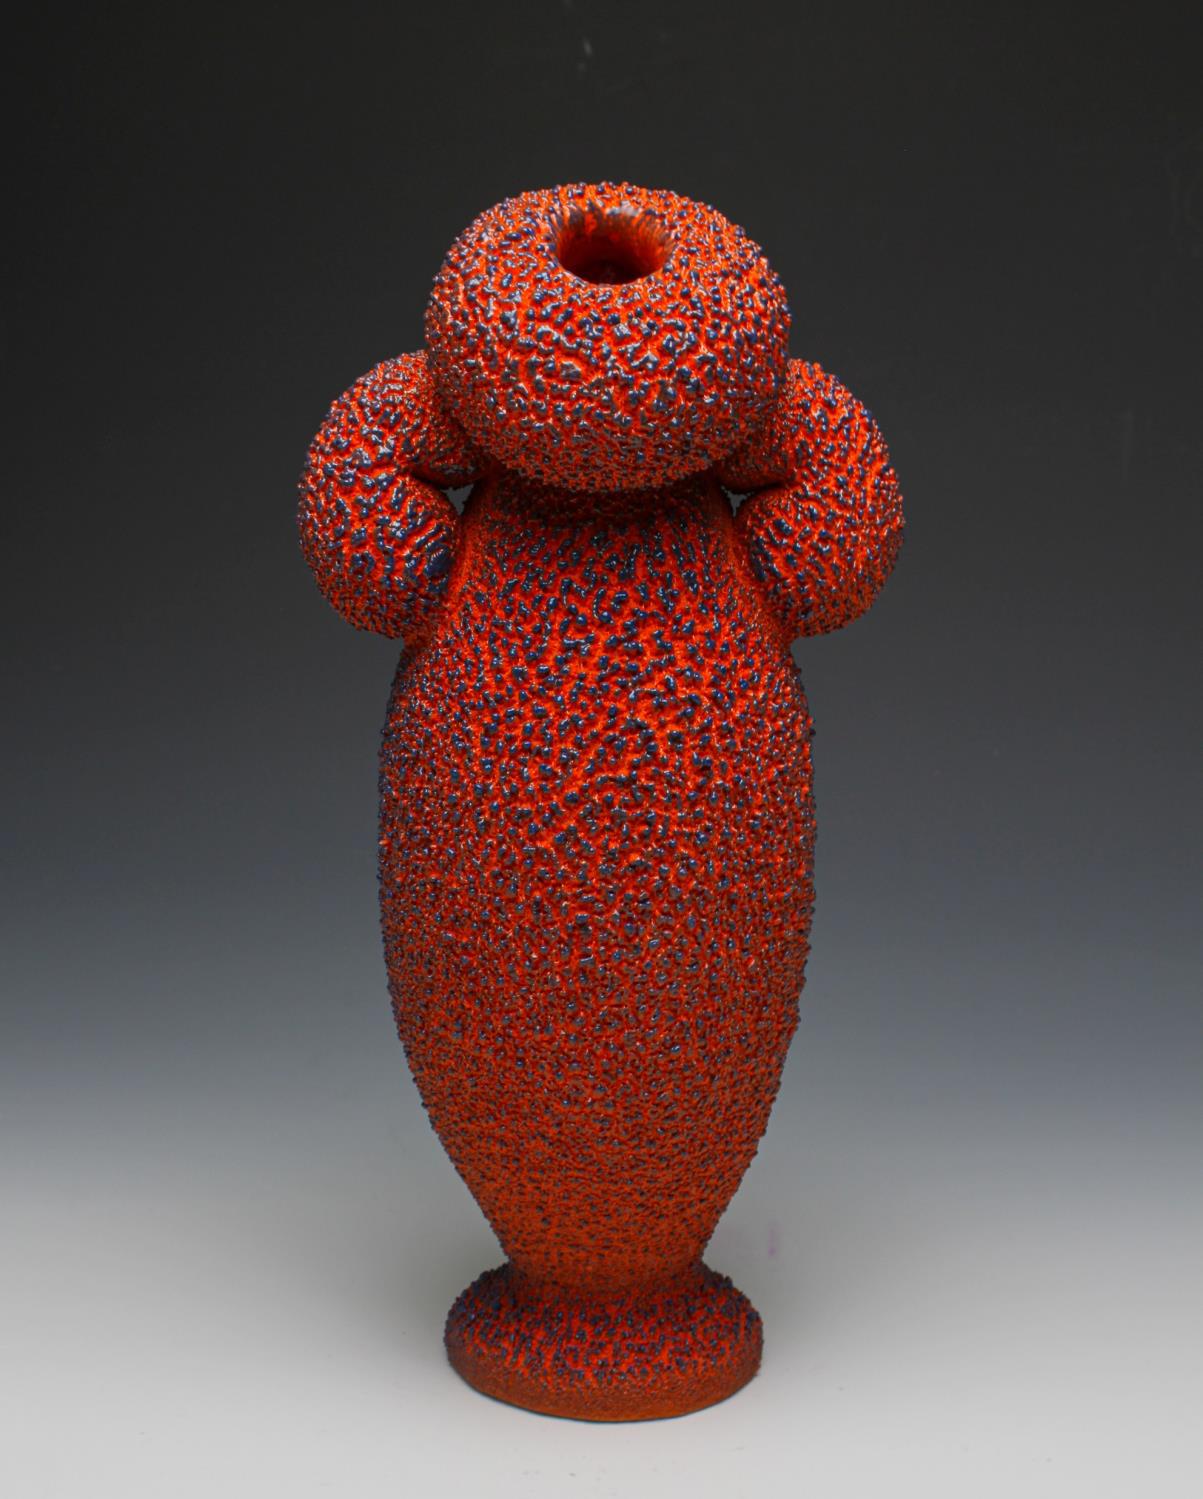 Maxwell Mustardo Figurative Sculpture - "Red and Blue Amphora", Contemporary, Ceramic, Sculpture, Stoneware, Glaze